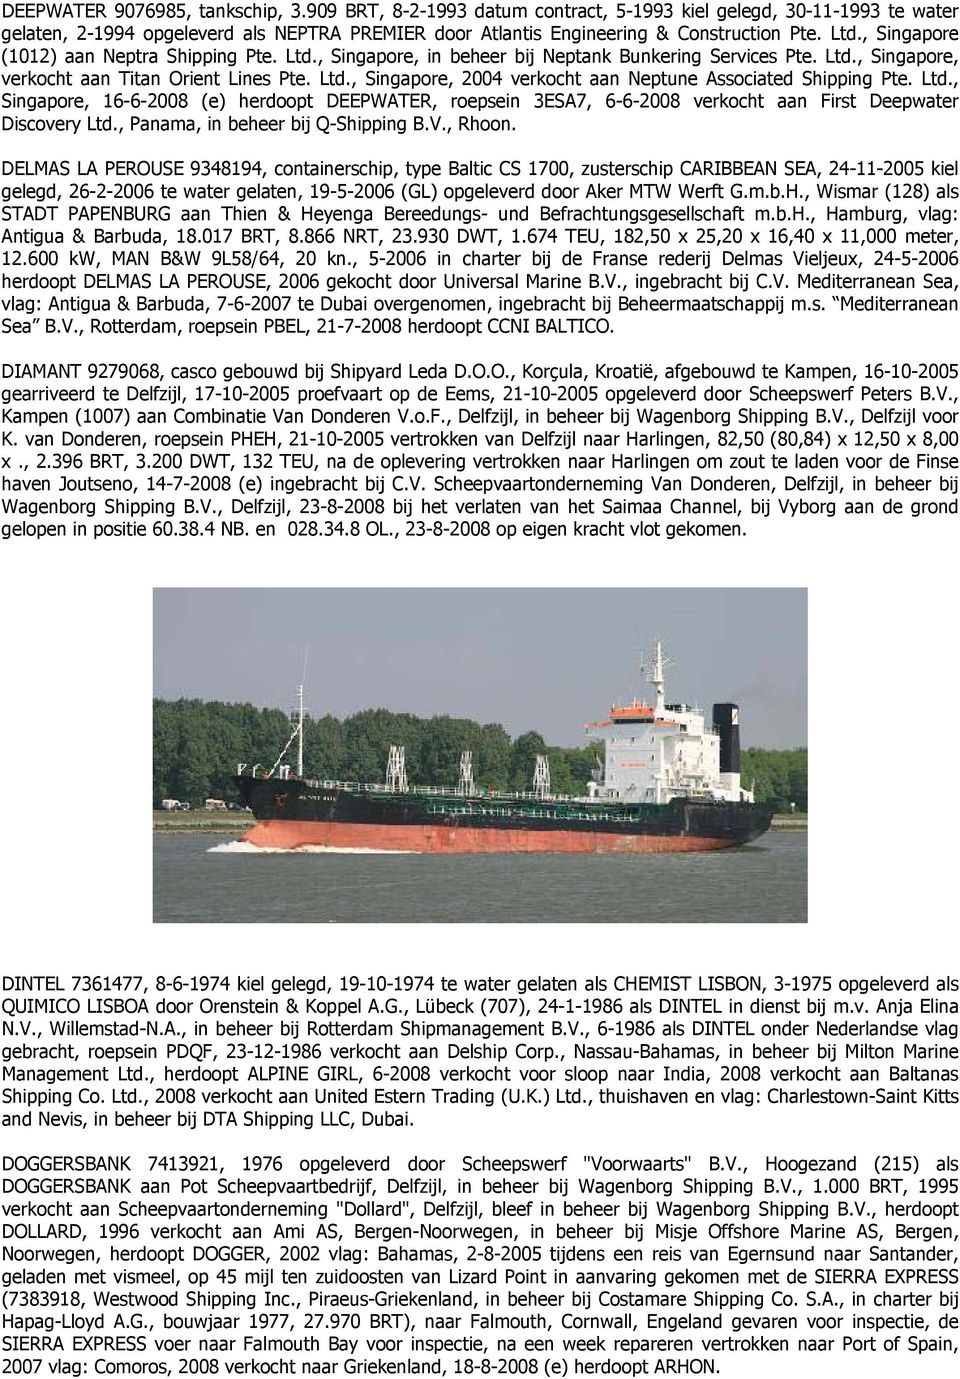 Ltd., Singapore, 16-6-2008 (e) herdoopt DEEPWATER, roepsein 3ESA7, 6-6-2008 verkocht aan First Deepwater Discovery Ltd., Panama, in beheer bij Q-Shipping B.V., Rhoon.